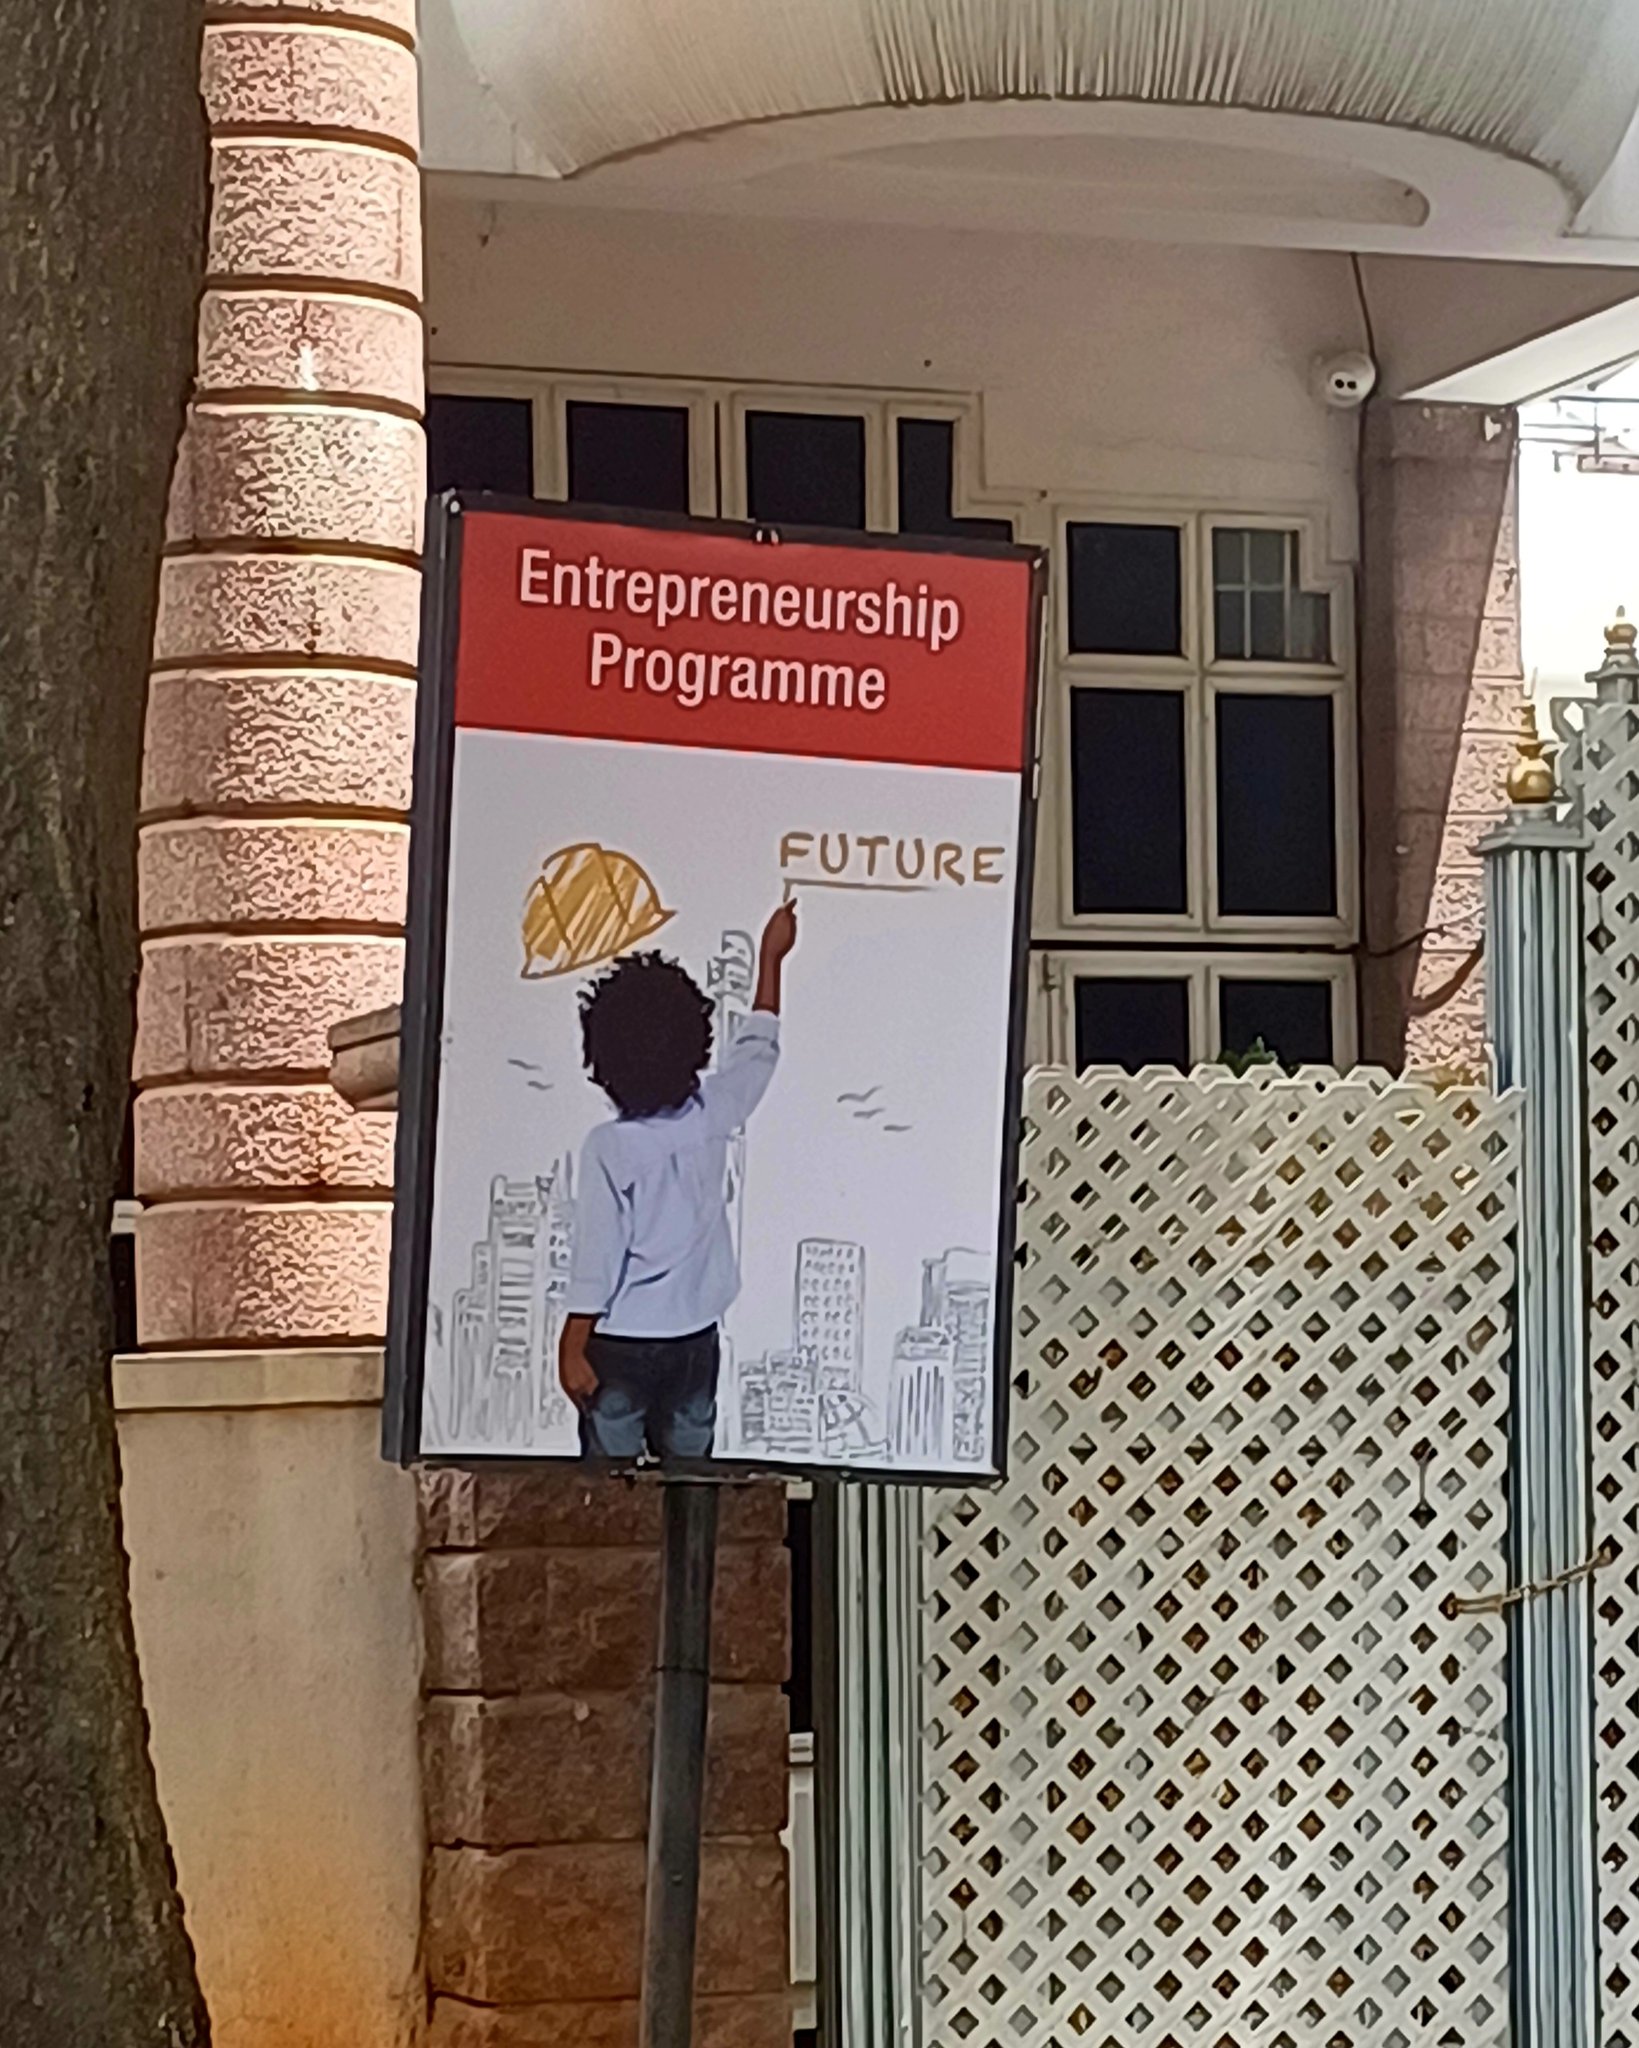 Entrepreneurship program in Bangalore is the future, poster in preschool